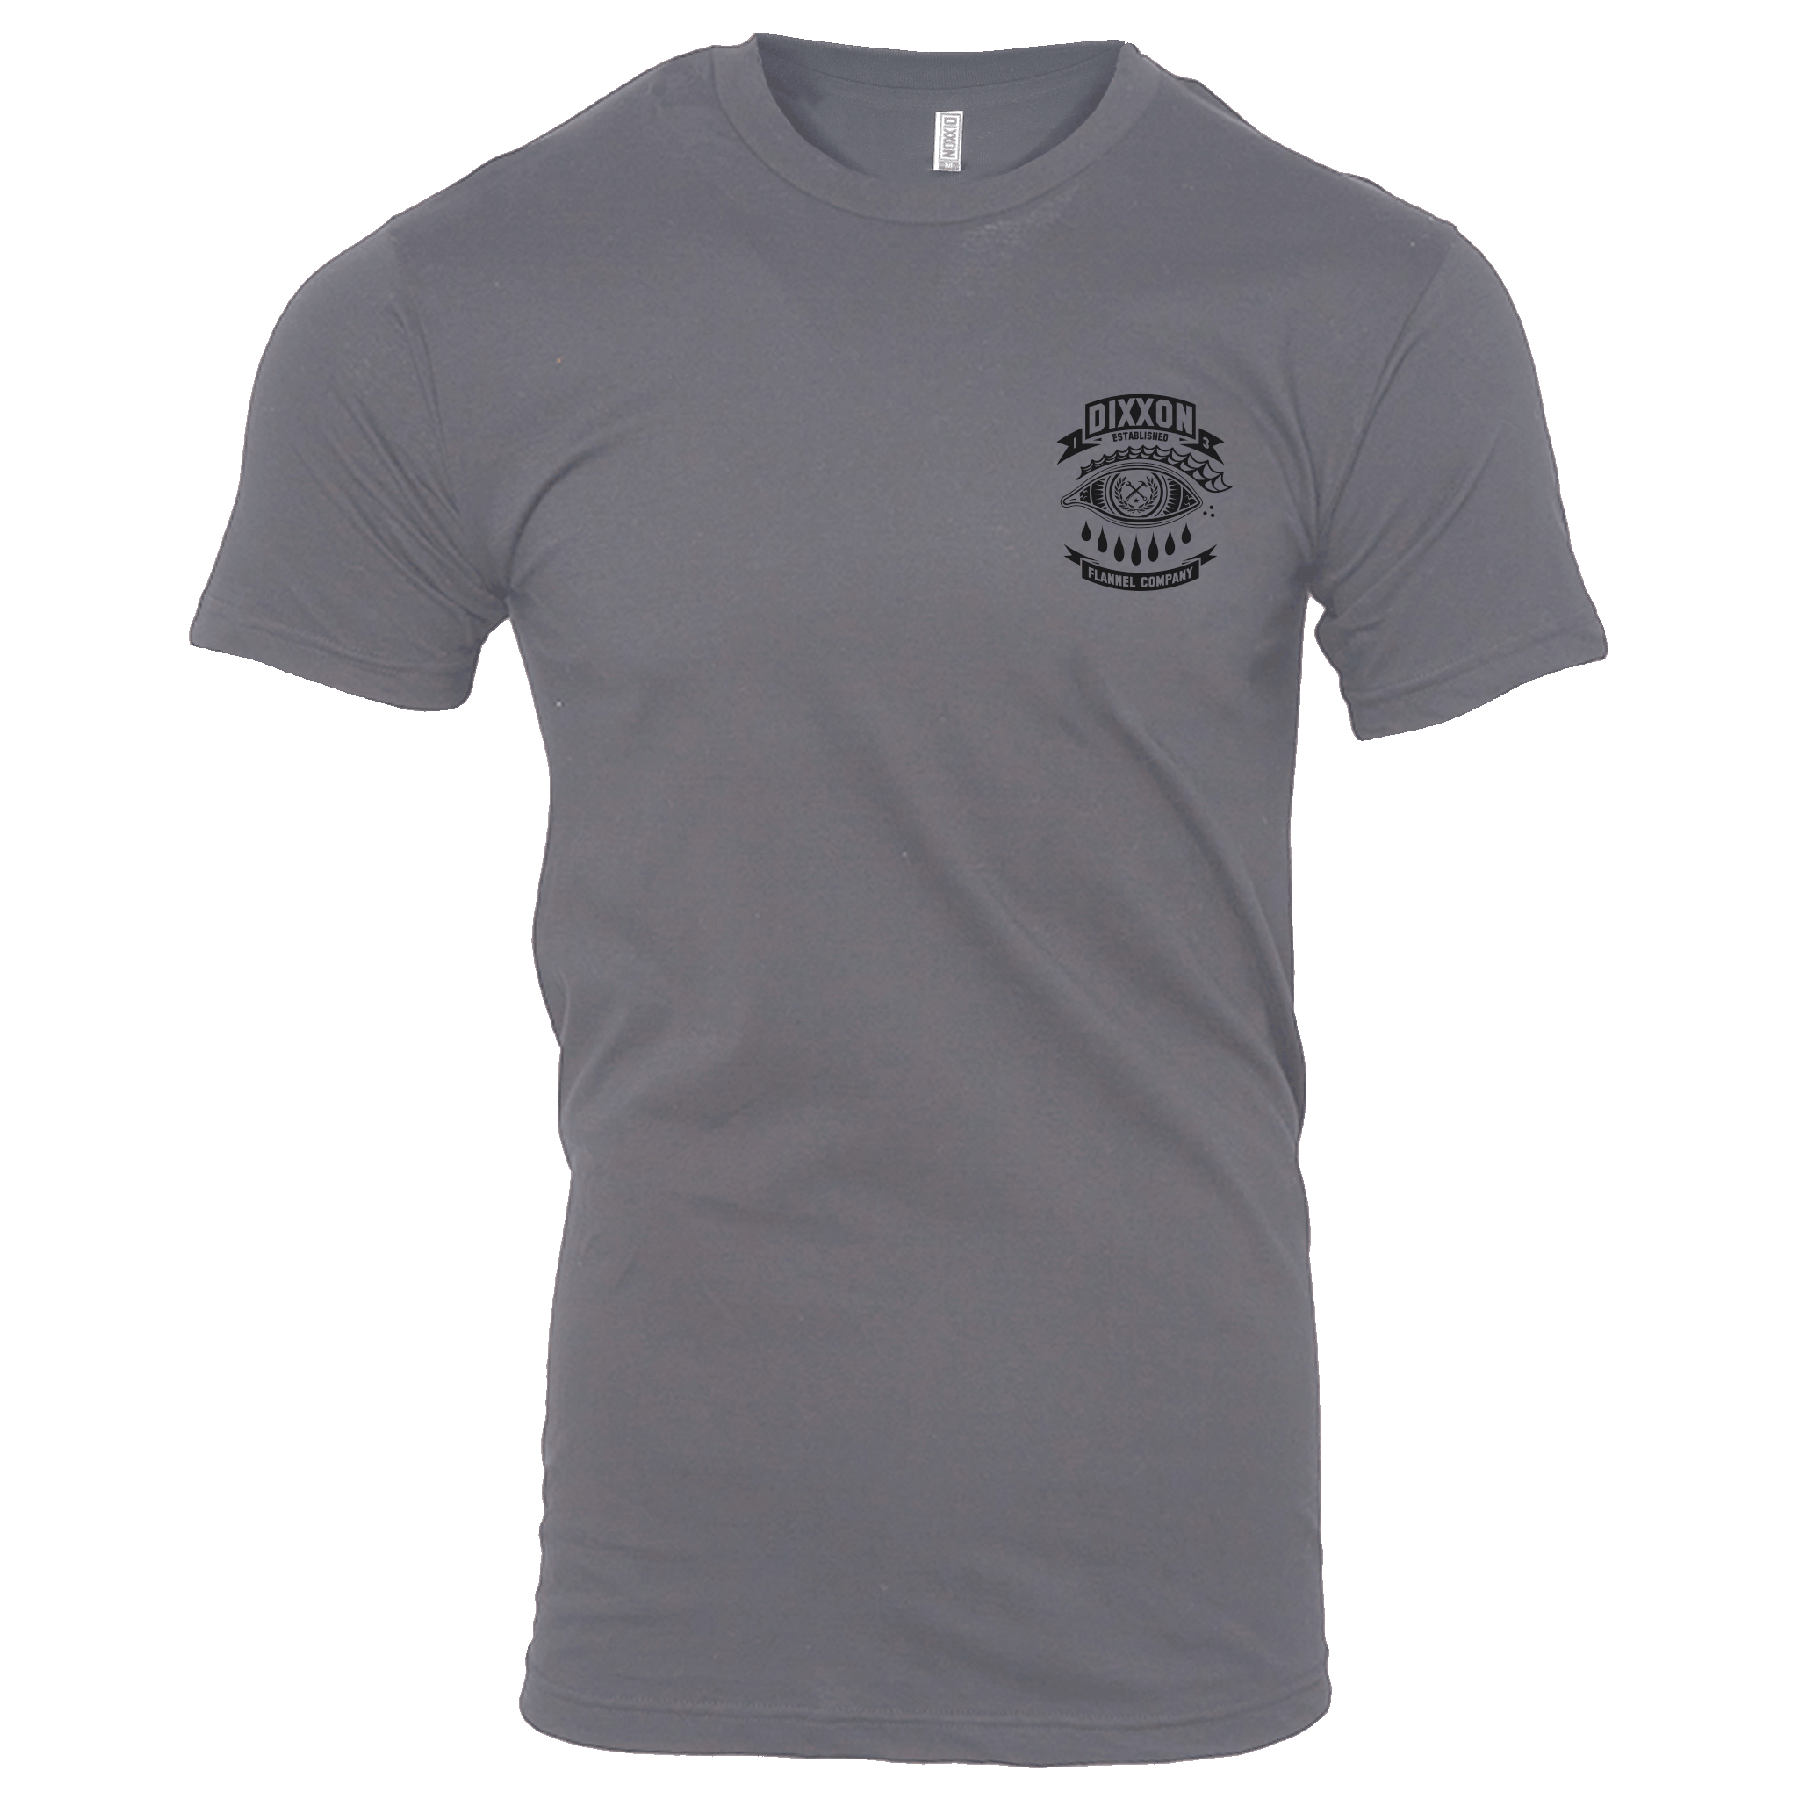 Mystic T-Shirt - Charcoal - Dixxon Flannel Co.